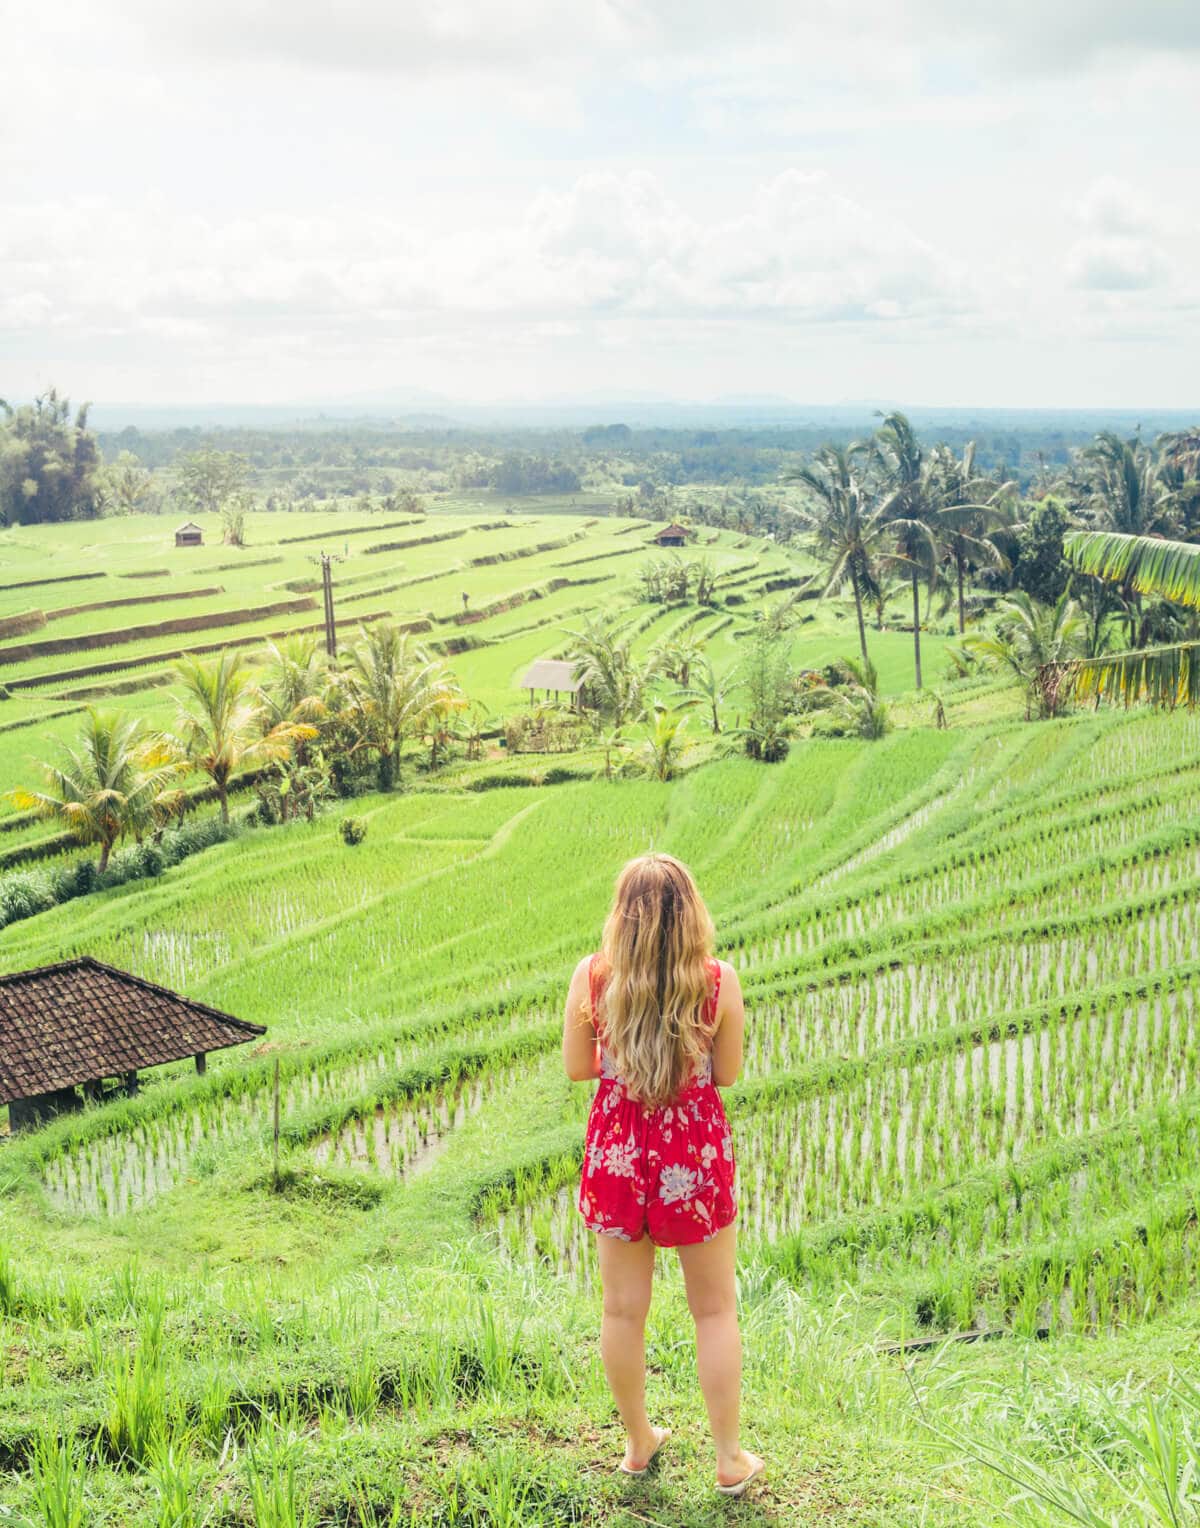 View across Jatiluwih Rice Terraces in Bali